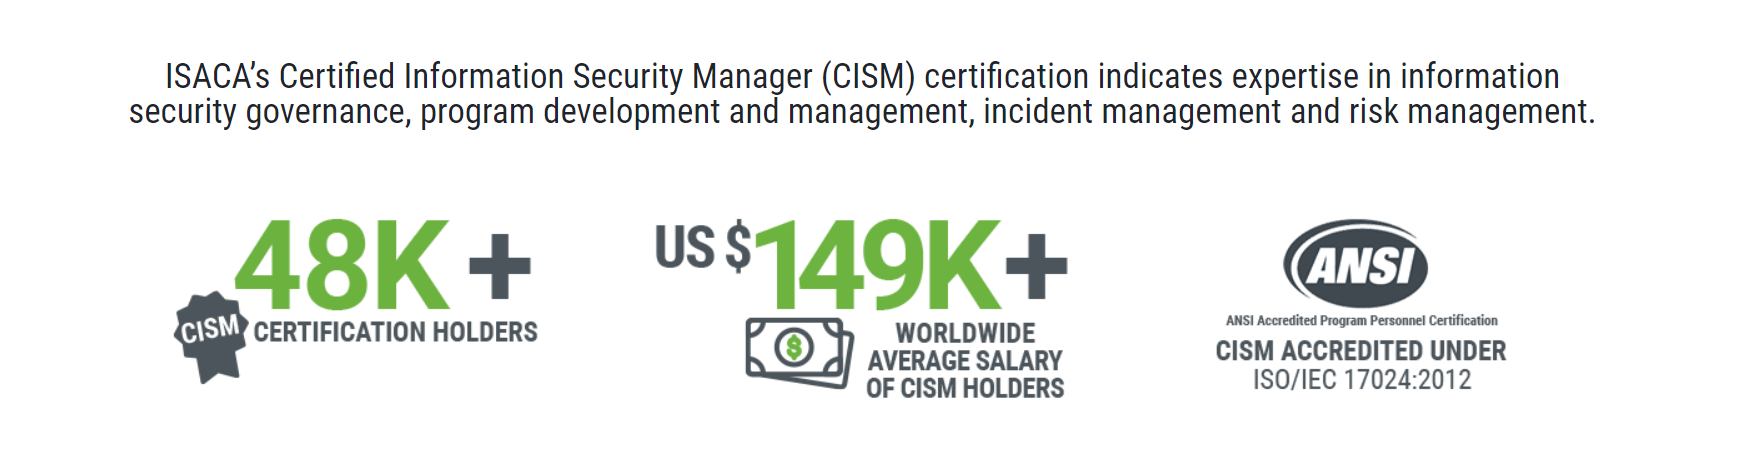 software developer certifications, Certified Information Security Manager (CISM)